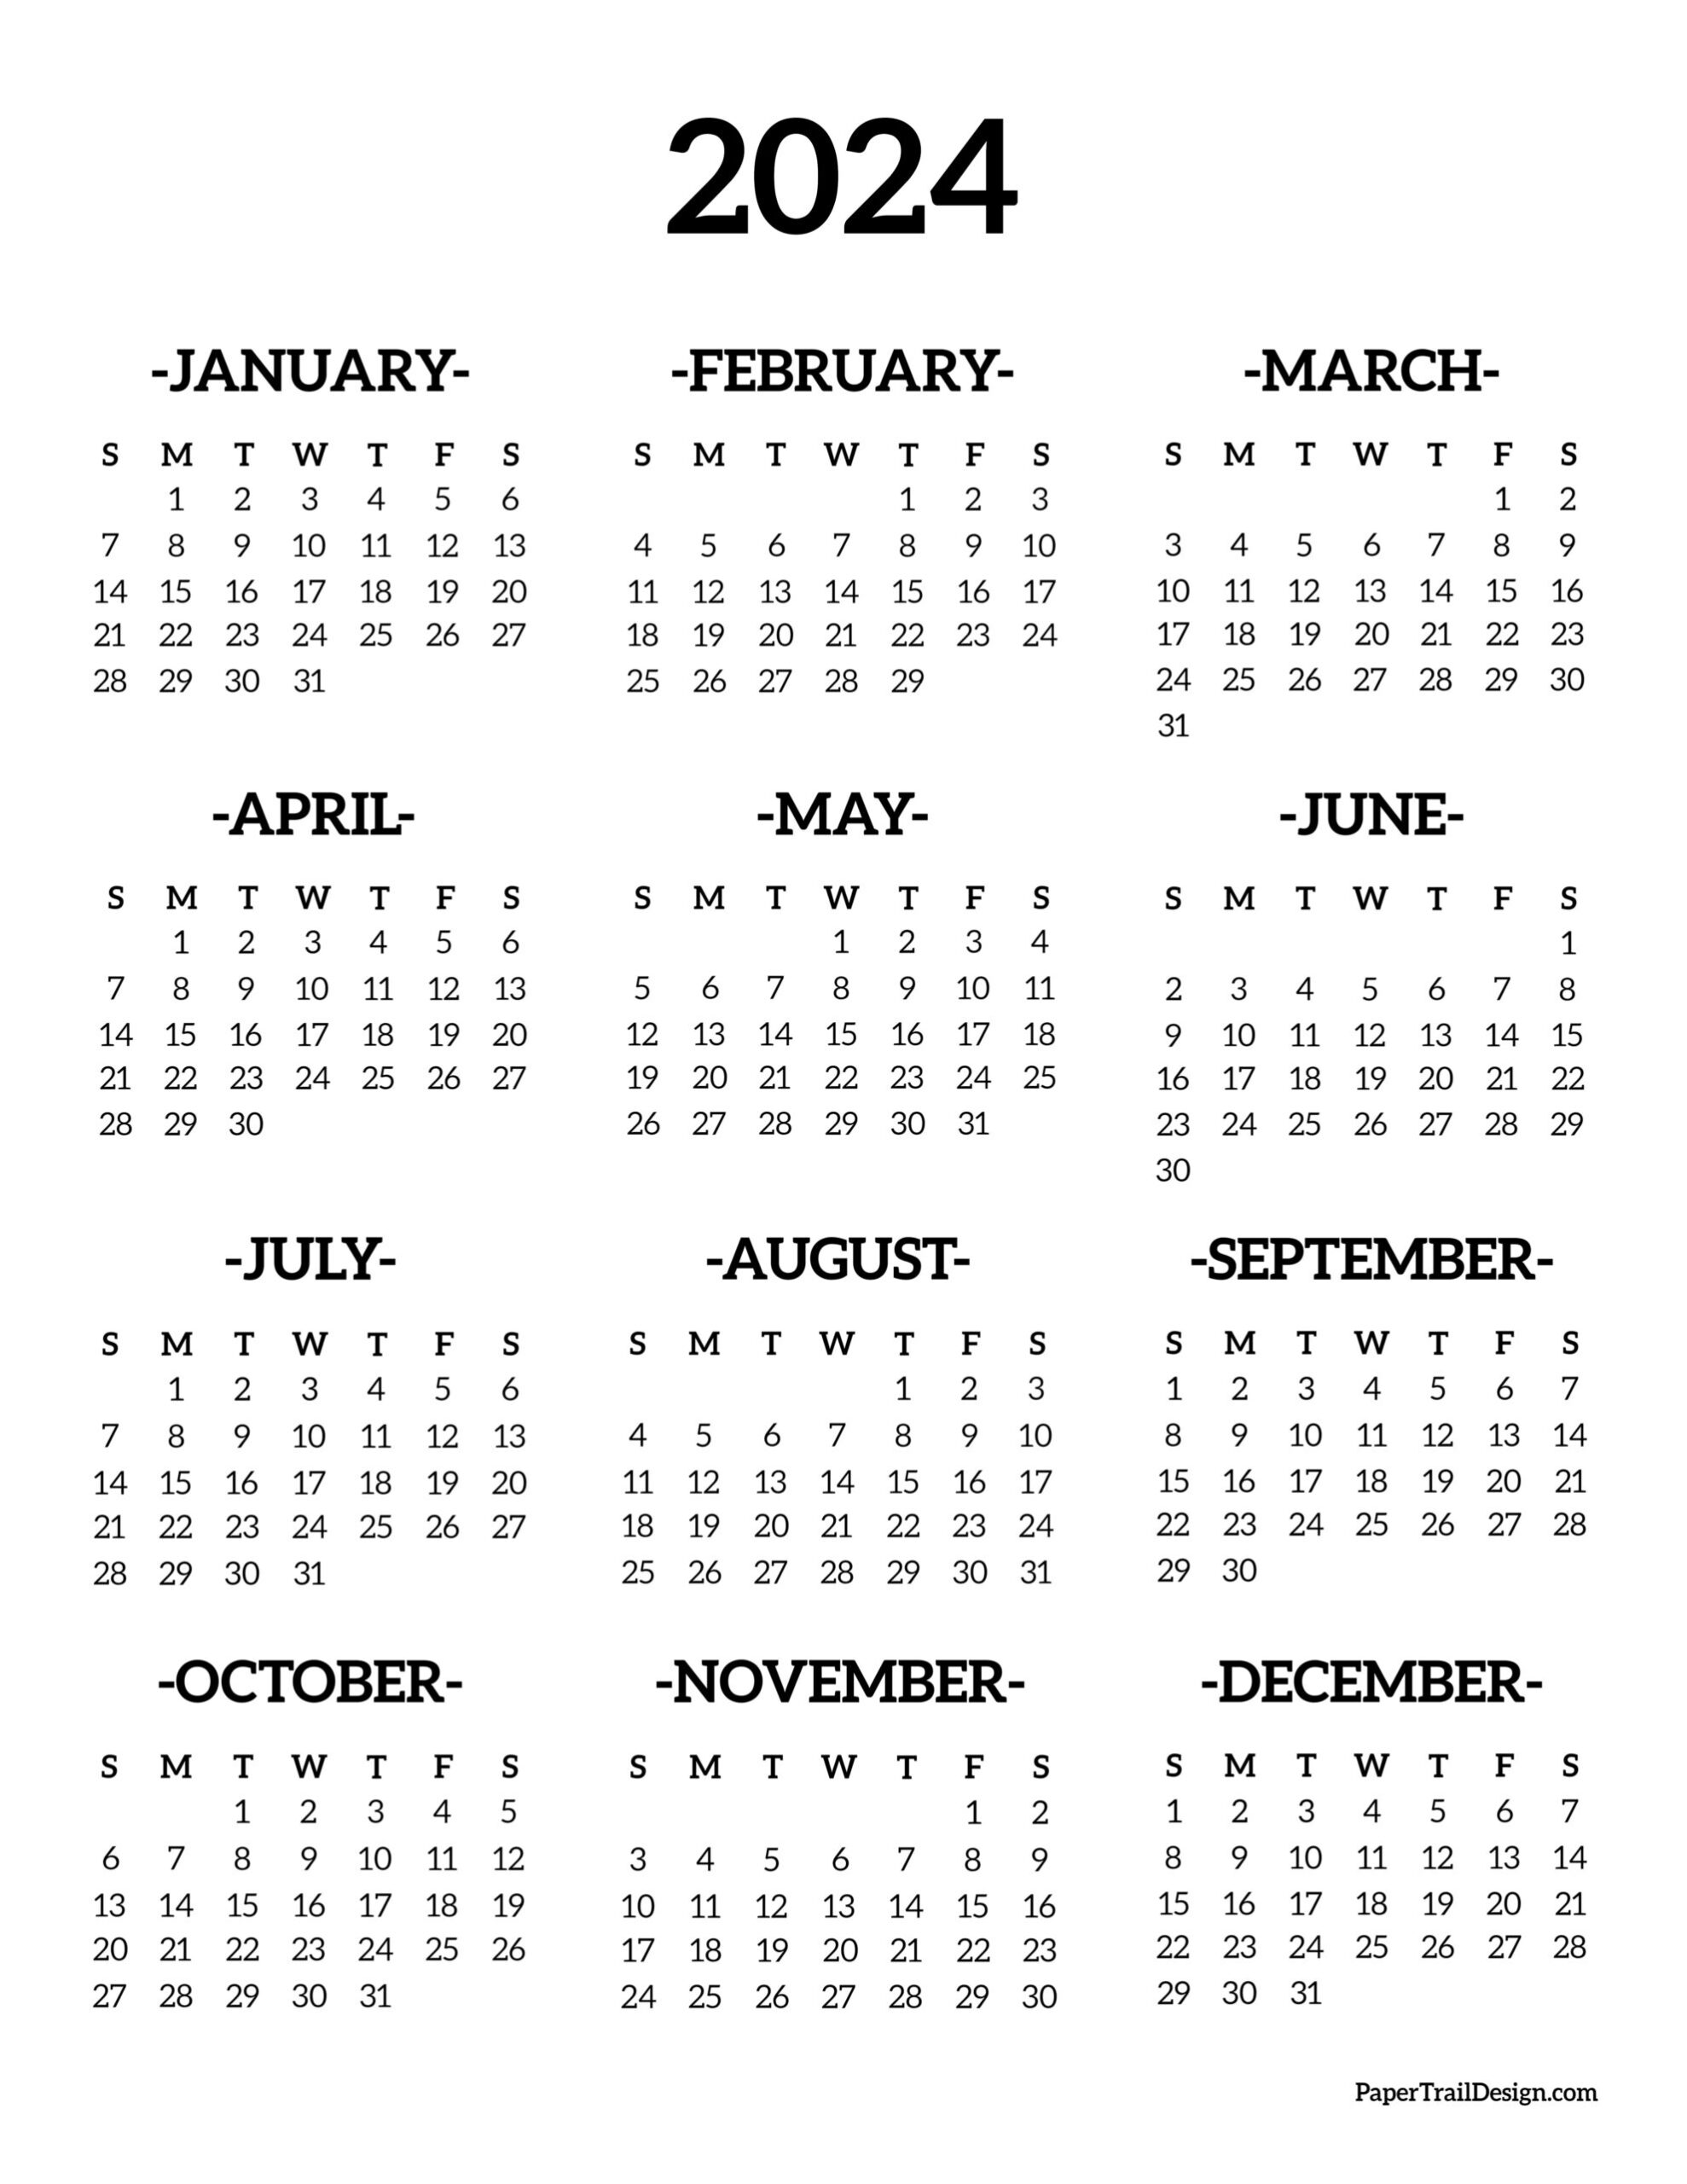 Calendar 2024 Printable One Page - Paper Trail Design | Free 2024 Printable Calendar